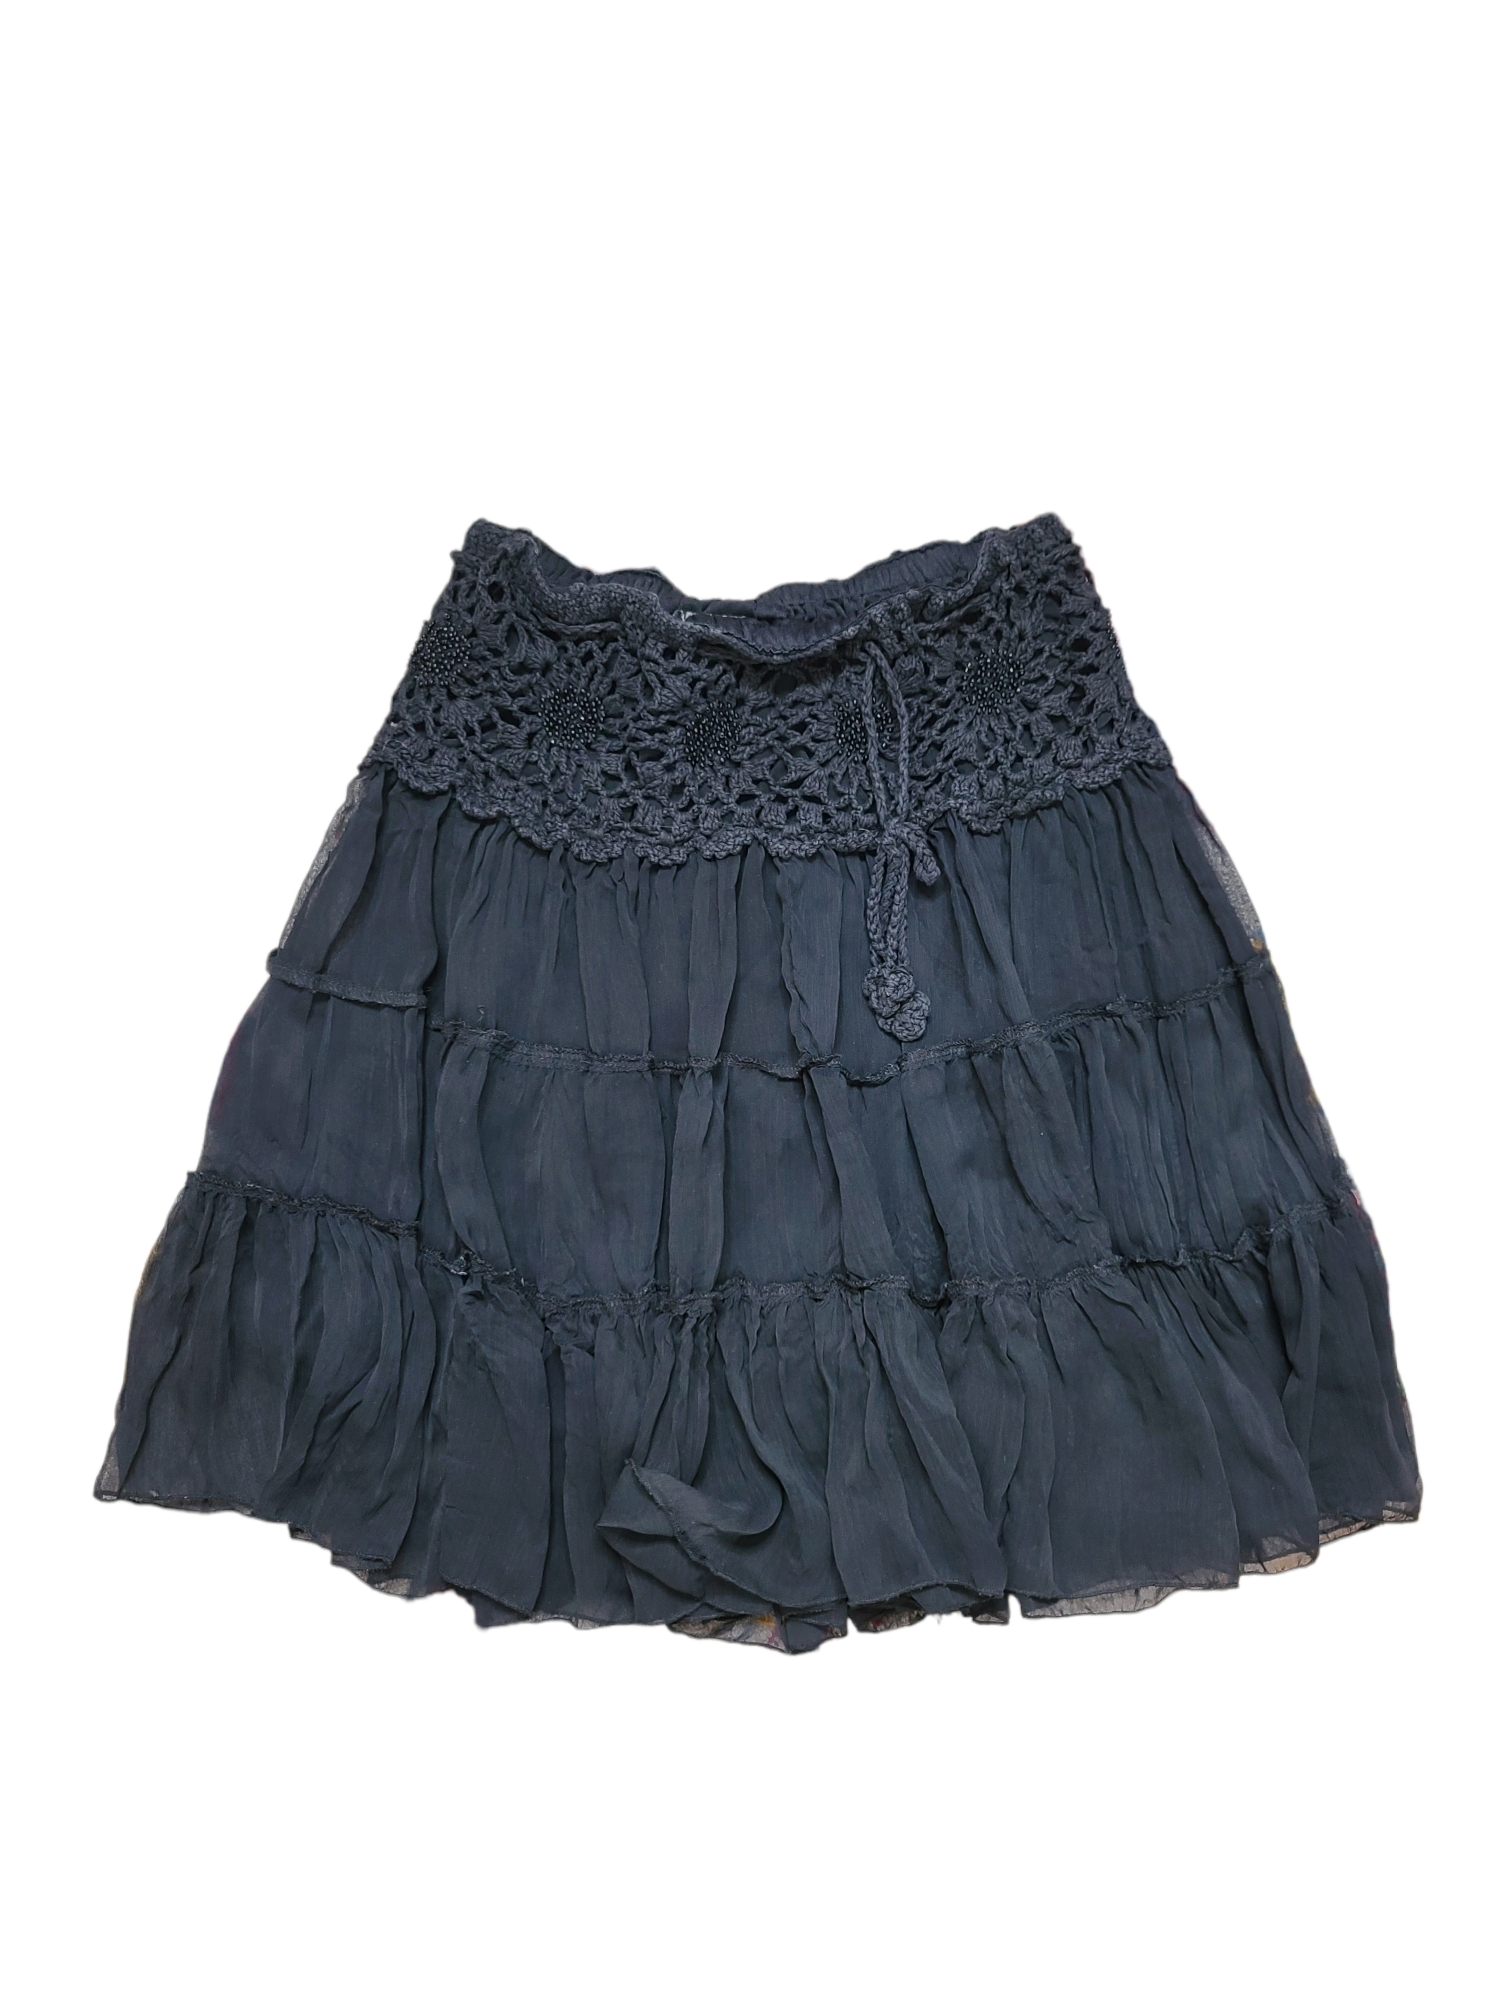 Crochet fairygrunge y2k ruffled skirt vintage